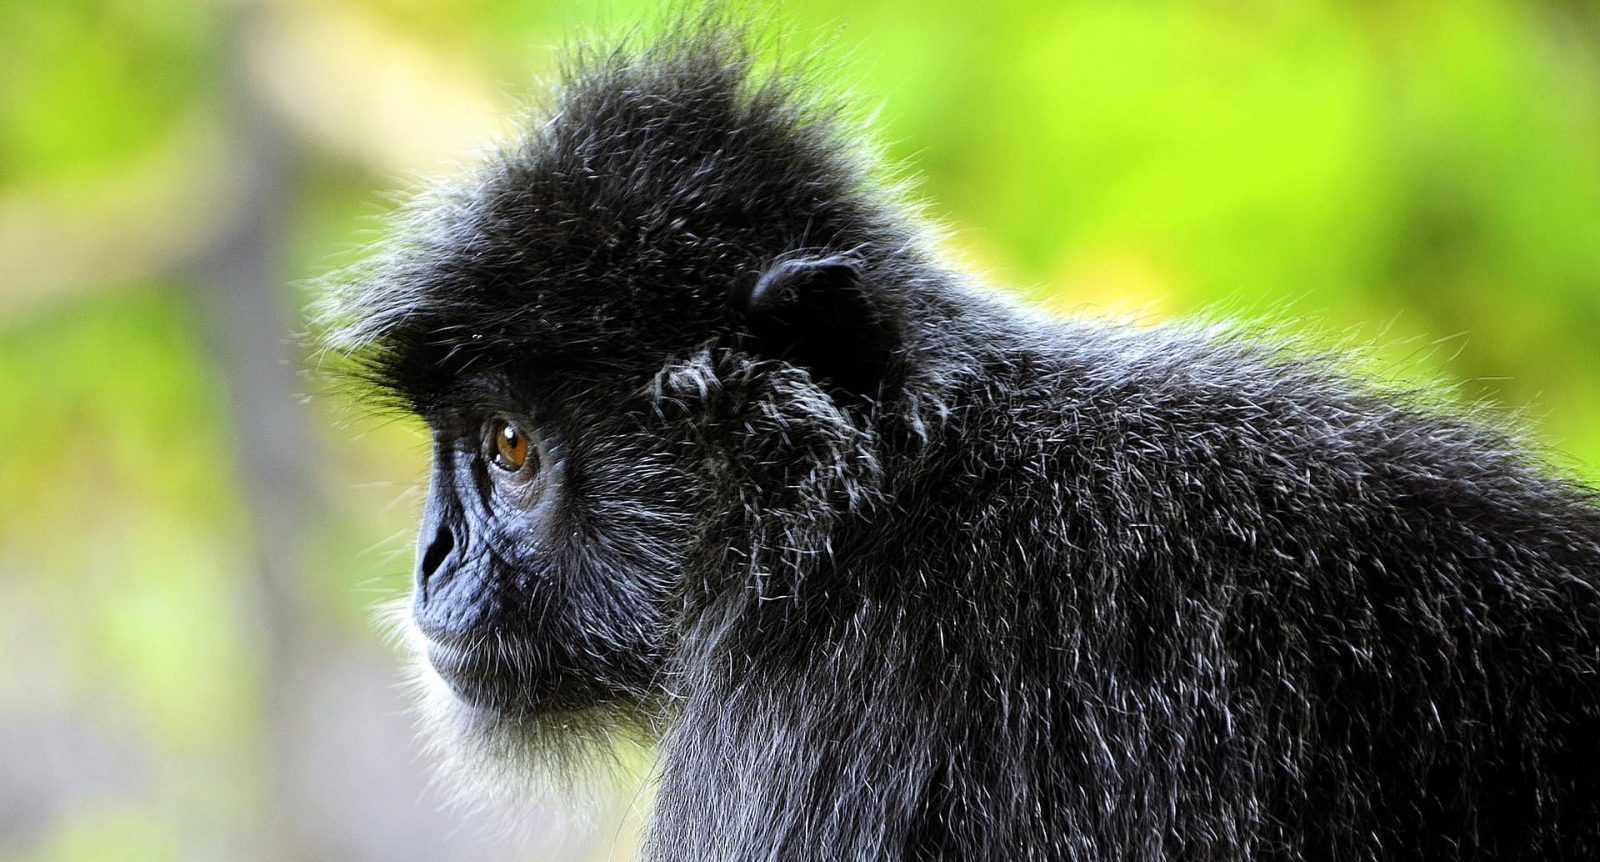 Mengenal Lutung Budeng, Primata Berambut Hitam yang Dilindungi